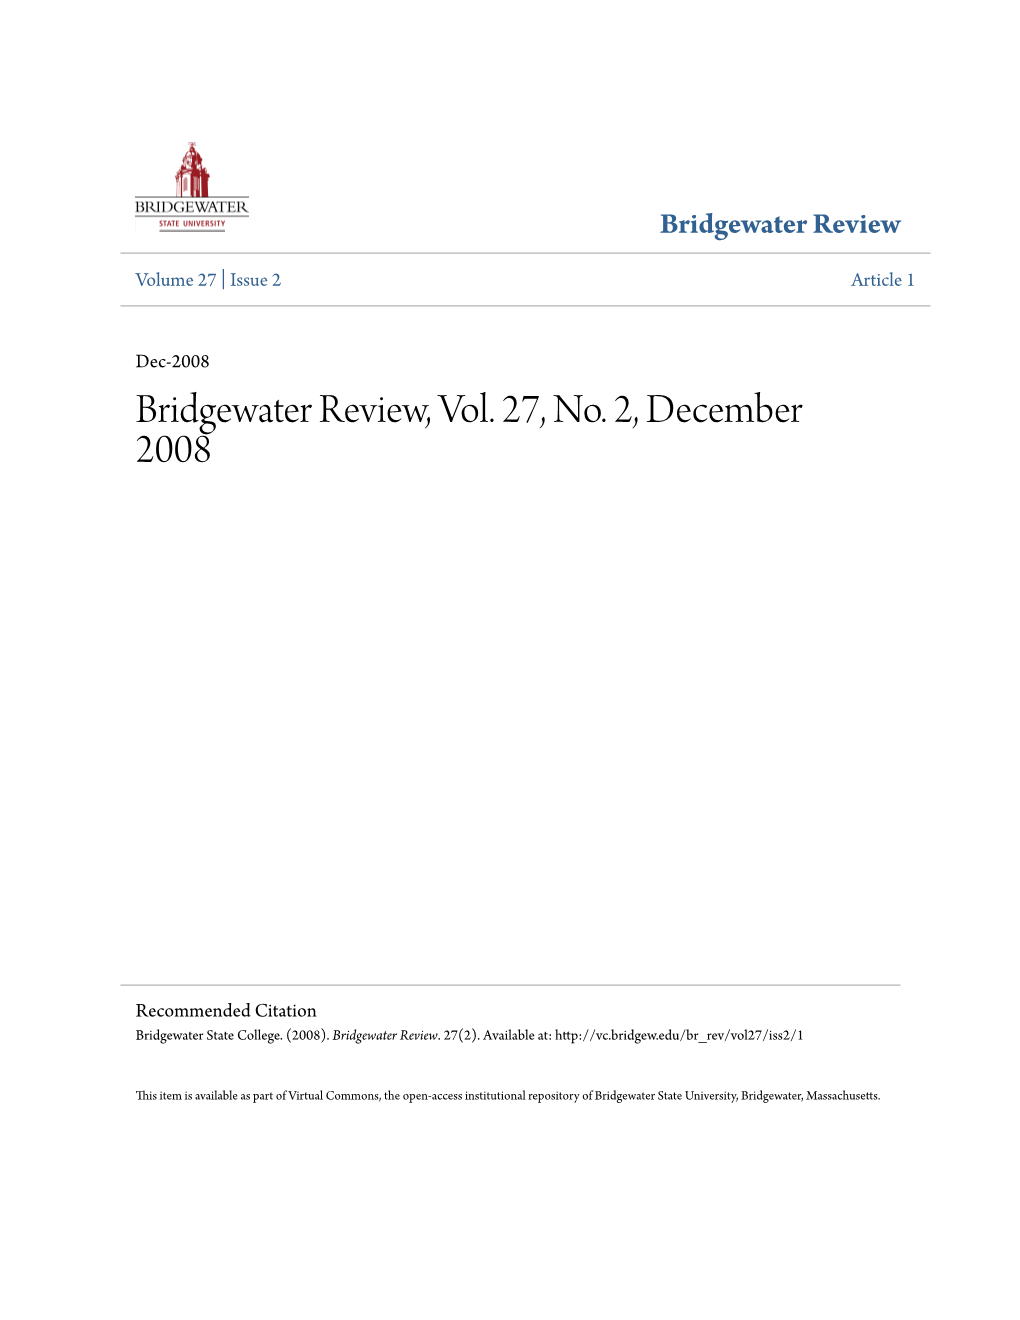 Bridgewater Review, Vol. 27, No. 2, December 2008